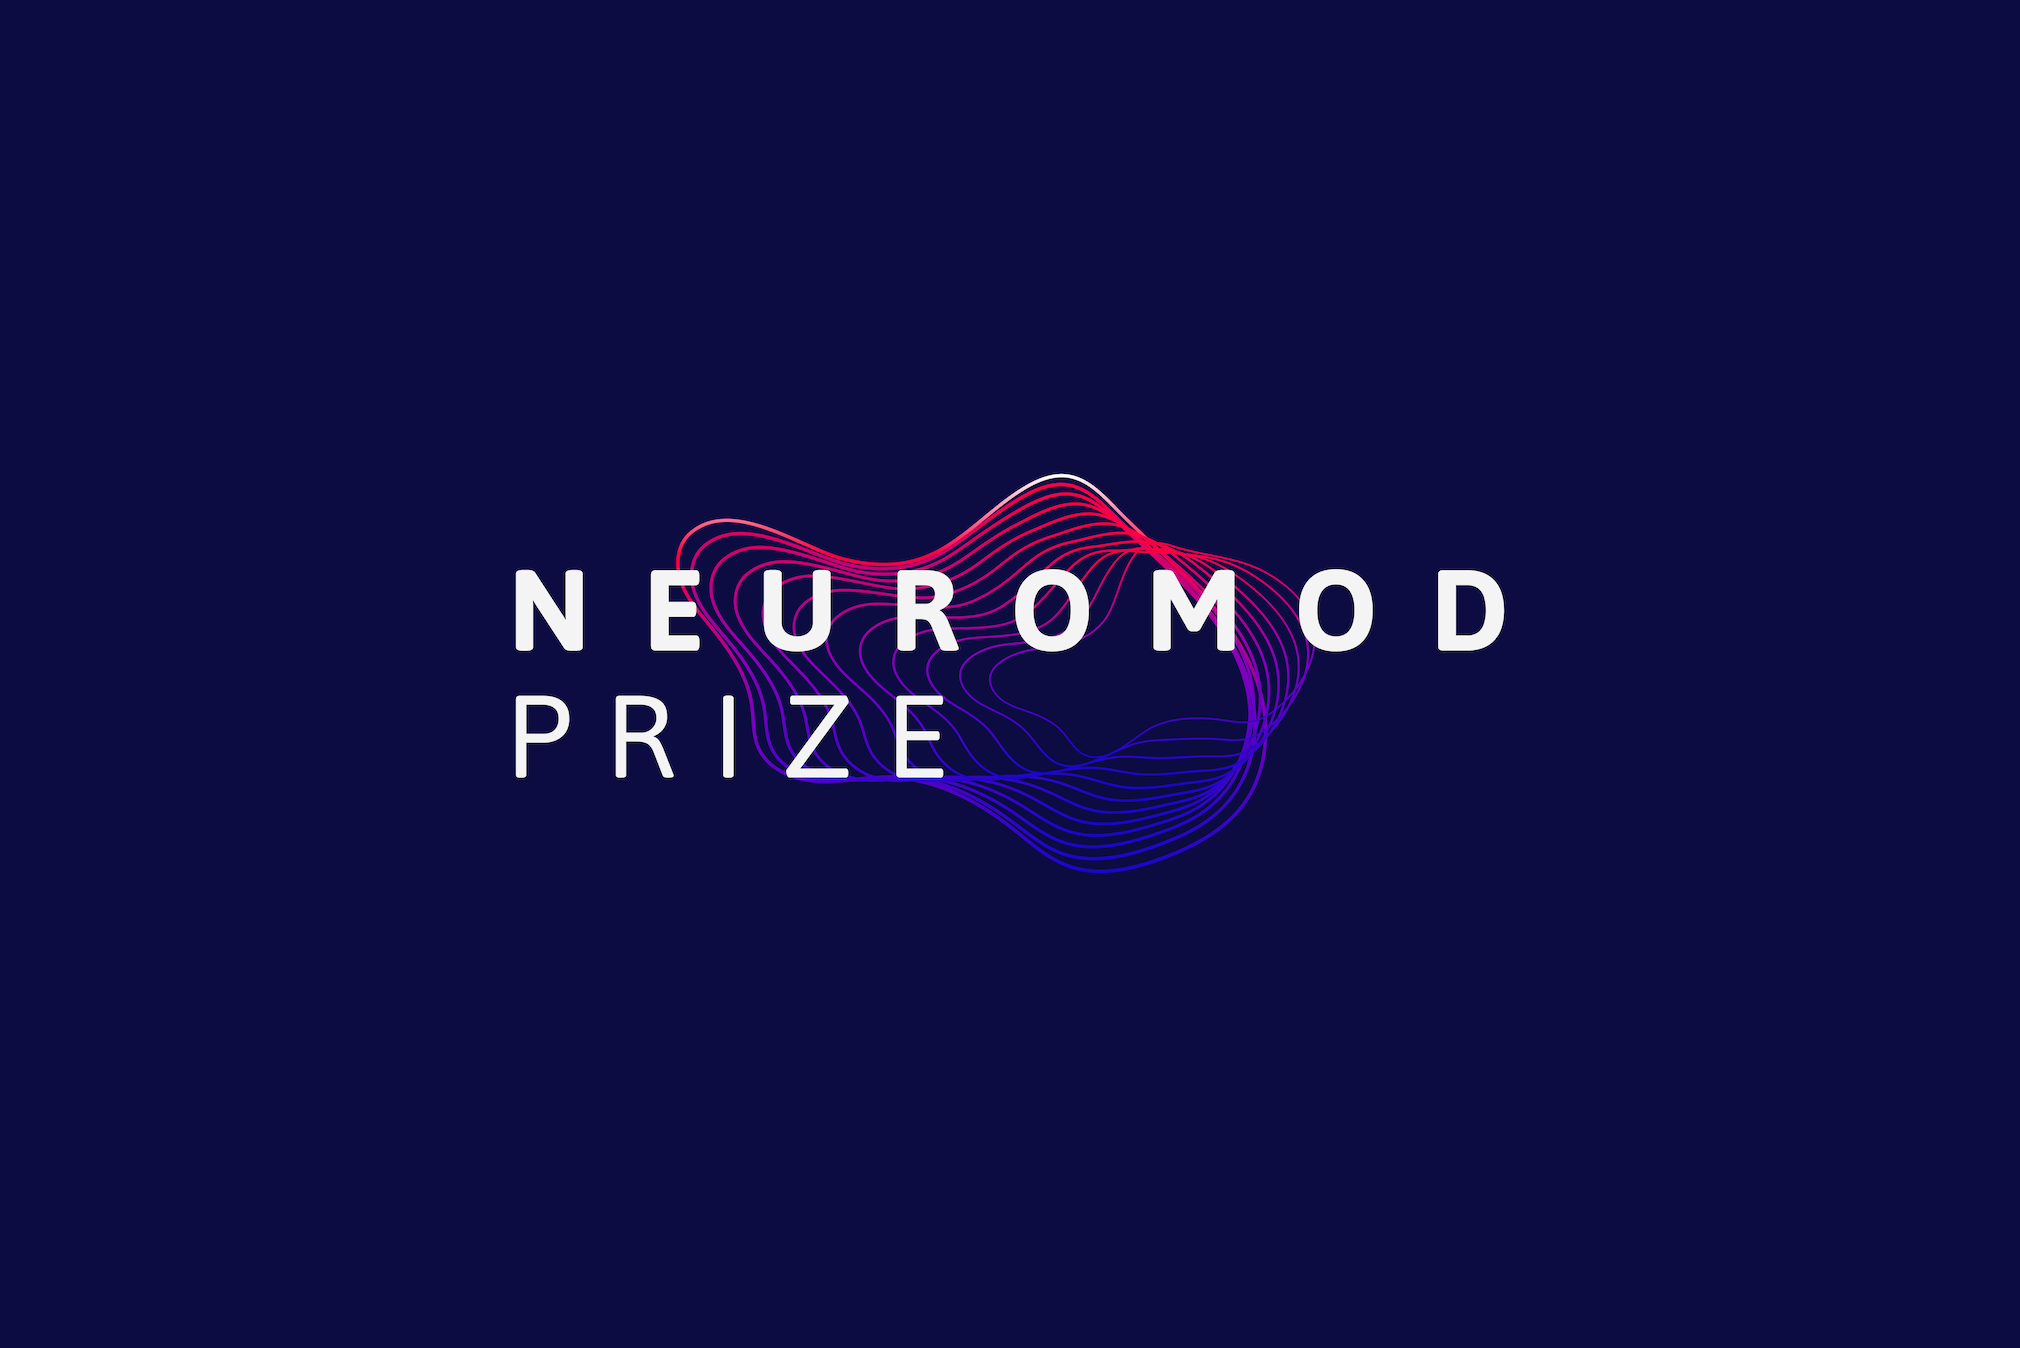 Neuromod Prize seeks groundbreaking uses of peripheral nerve stimulation